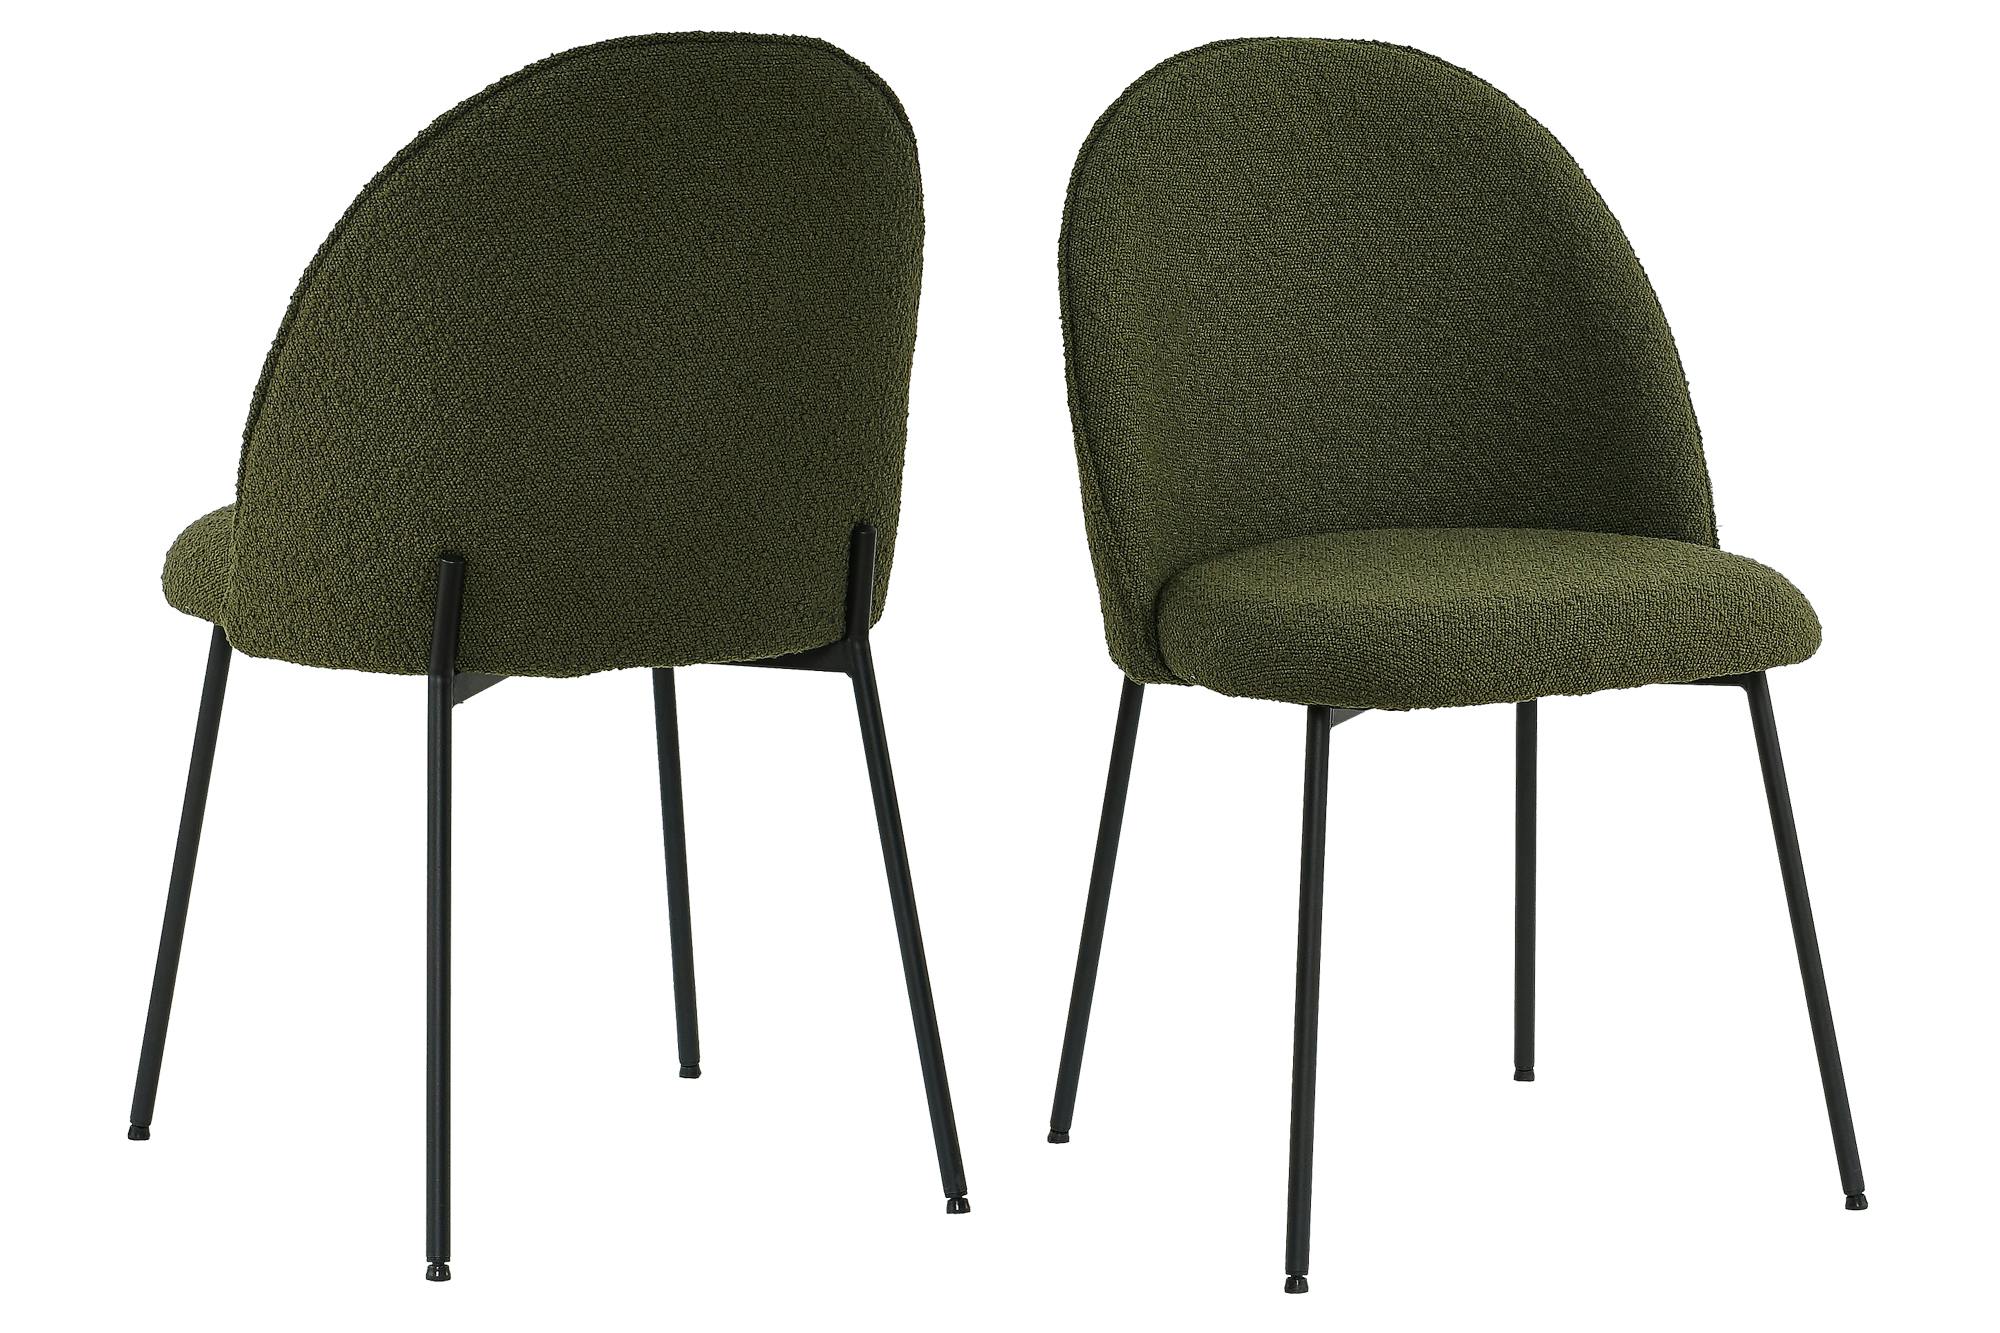 | Metall SIT T-Bouclé B57xT54xH52cm 2er-Set Tom | gepolstert SIT&CHAIRS Chair grün| |Serie METRO Stuhl Pad Beine |02412-03 | Möbel Marktplatz schwarz Tailor |